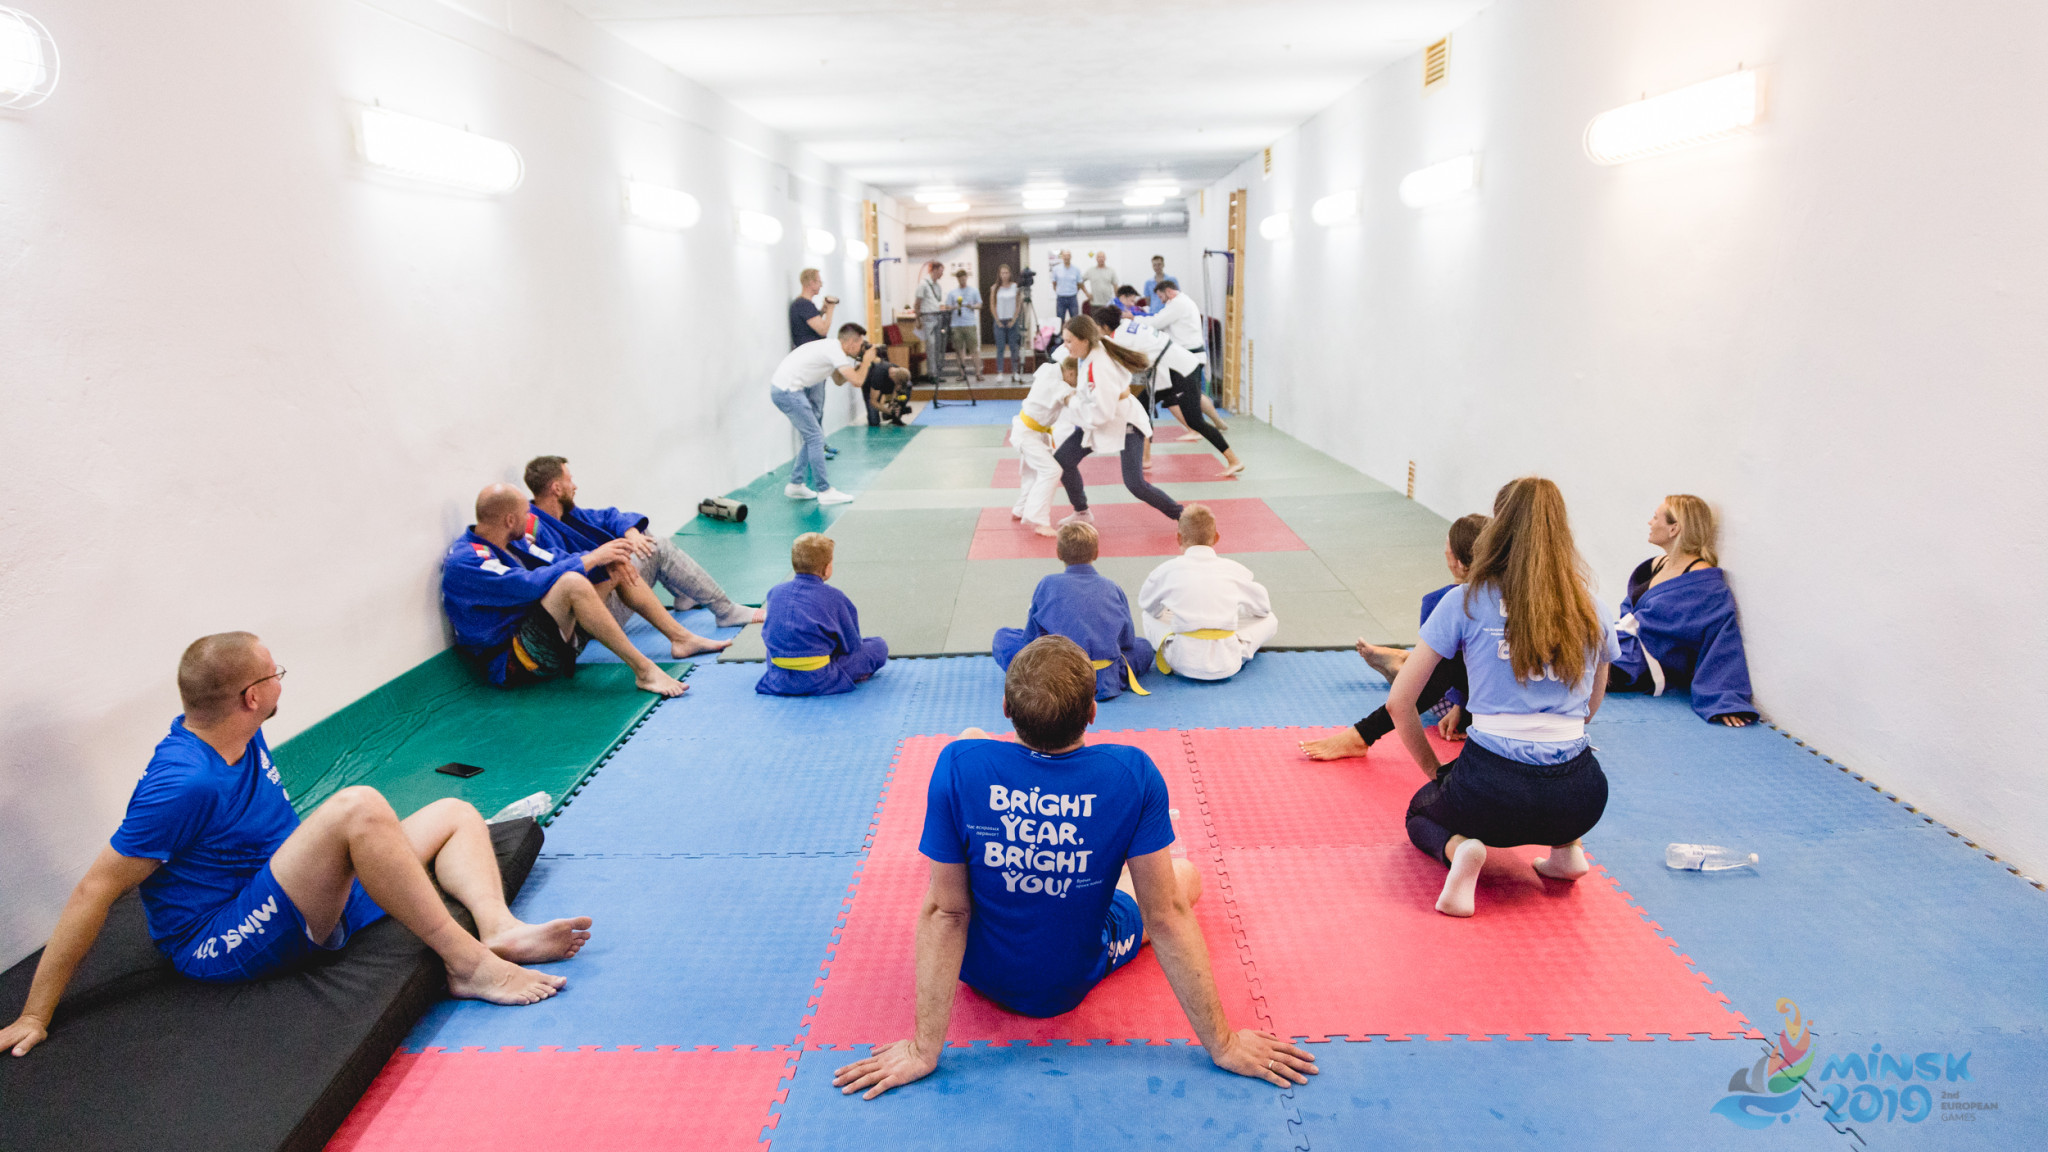 European judo champion Marina Slutskaya put the participants through their paces ©Minsk 2019